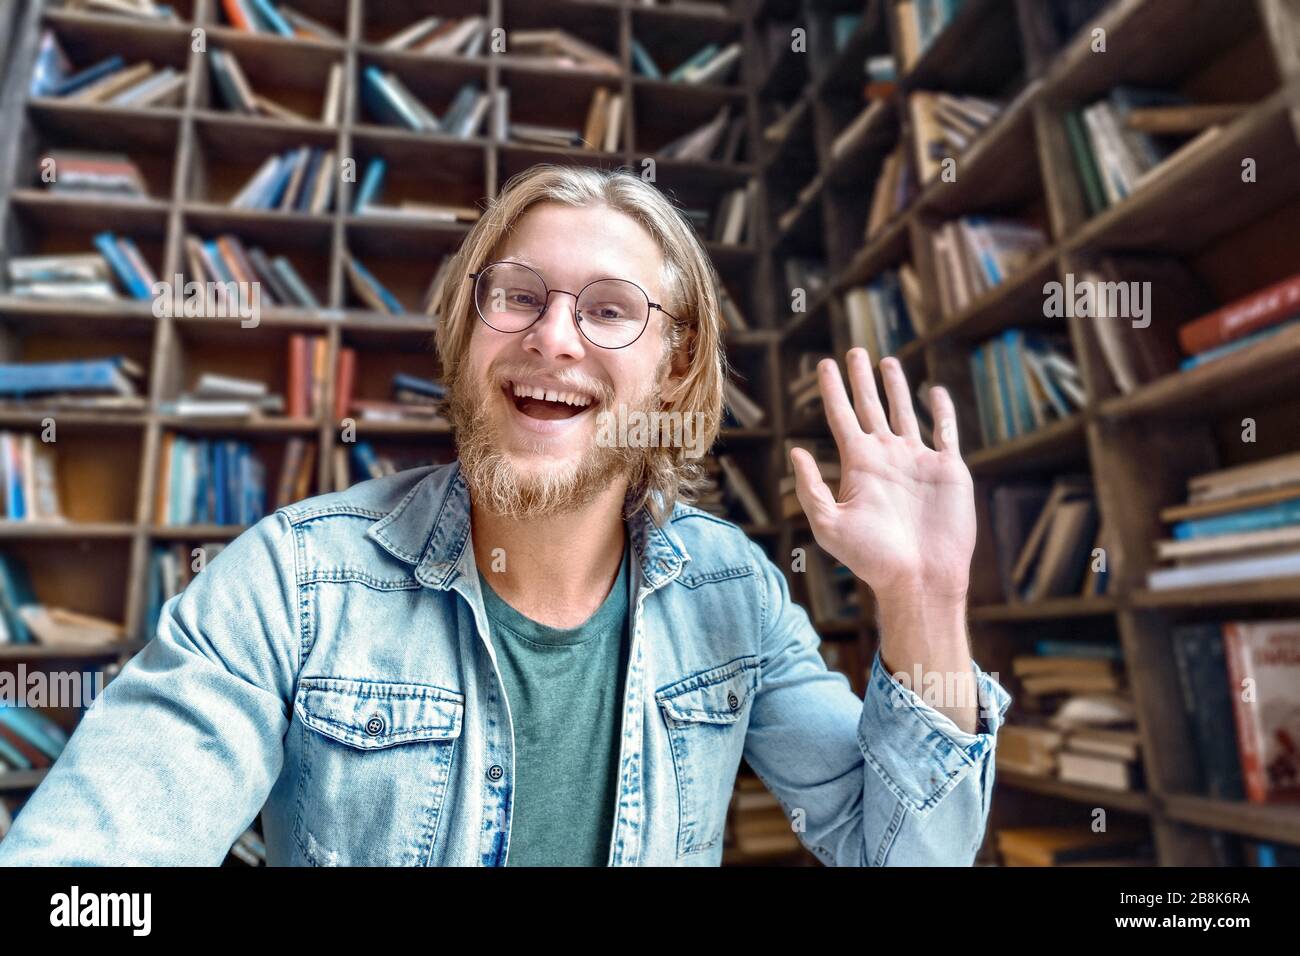 Cheerful male blogger influencer waving hand looking at camera. Stock Photo